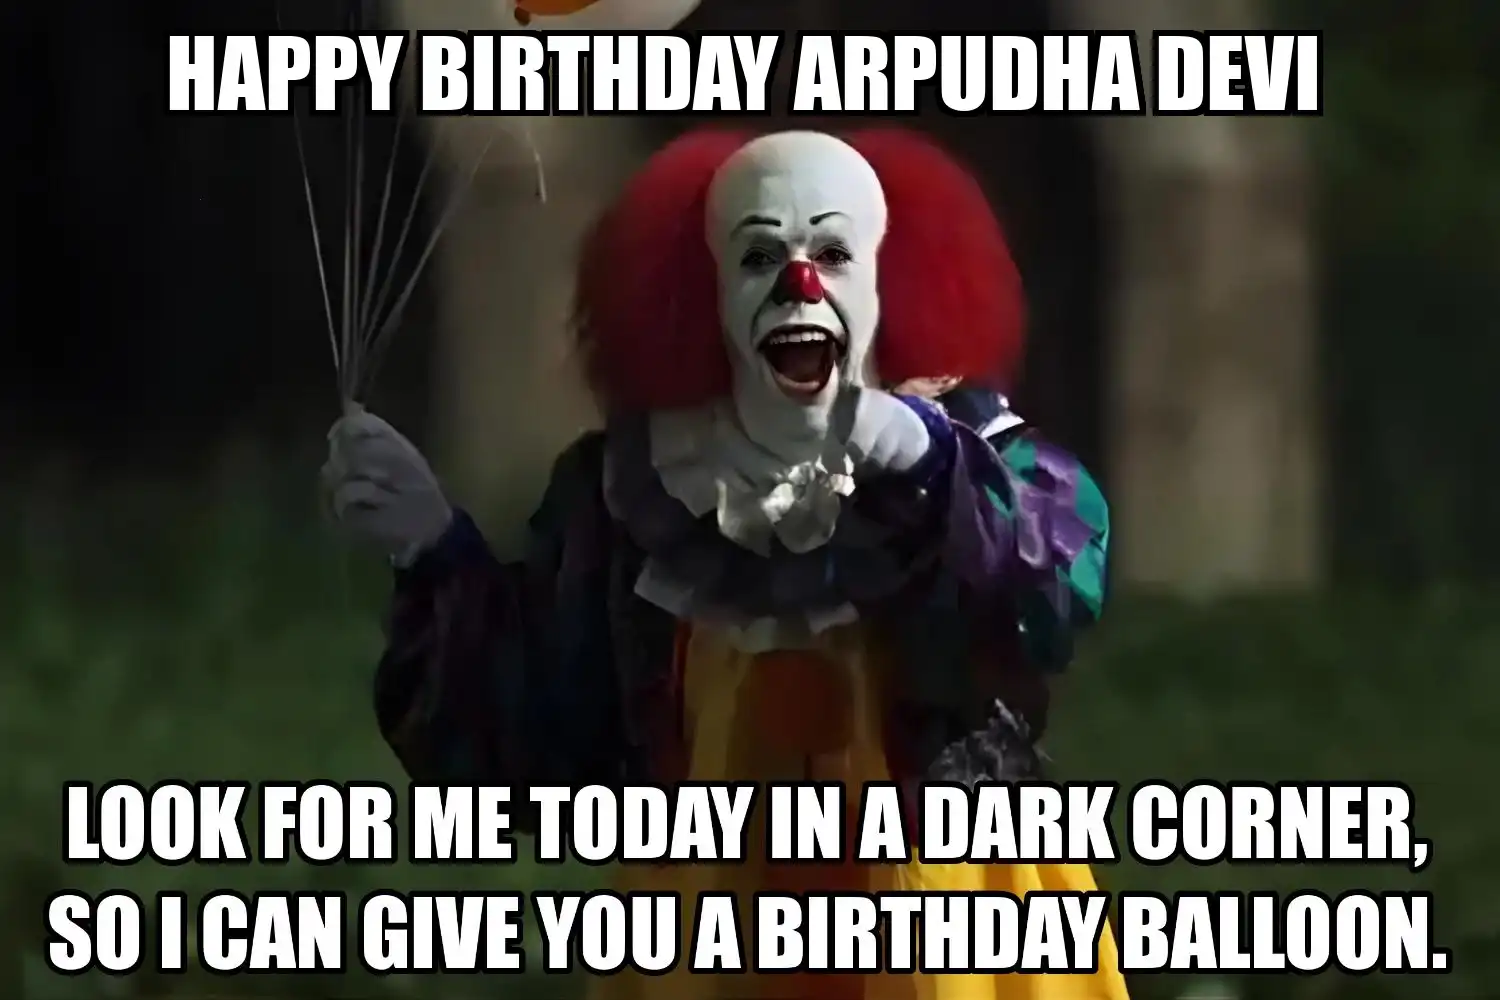 Happy Birthday Arpudha devi I Can Give You A Balloon Meme